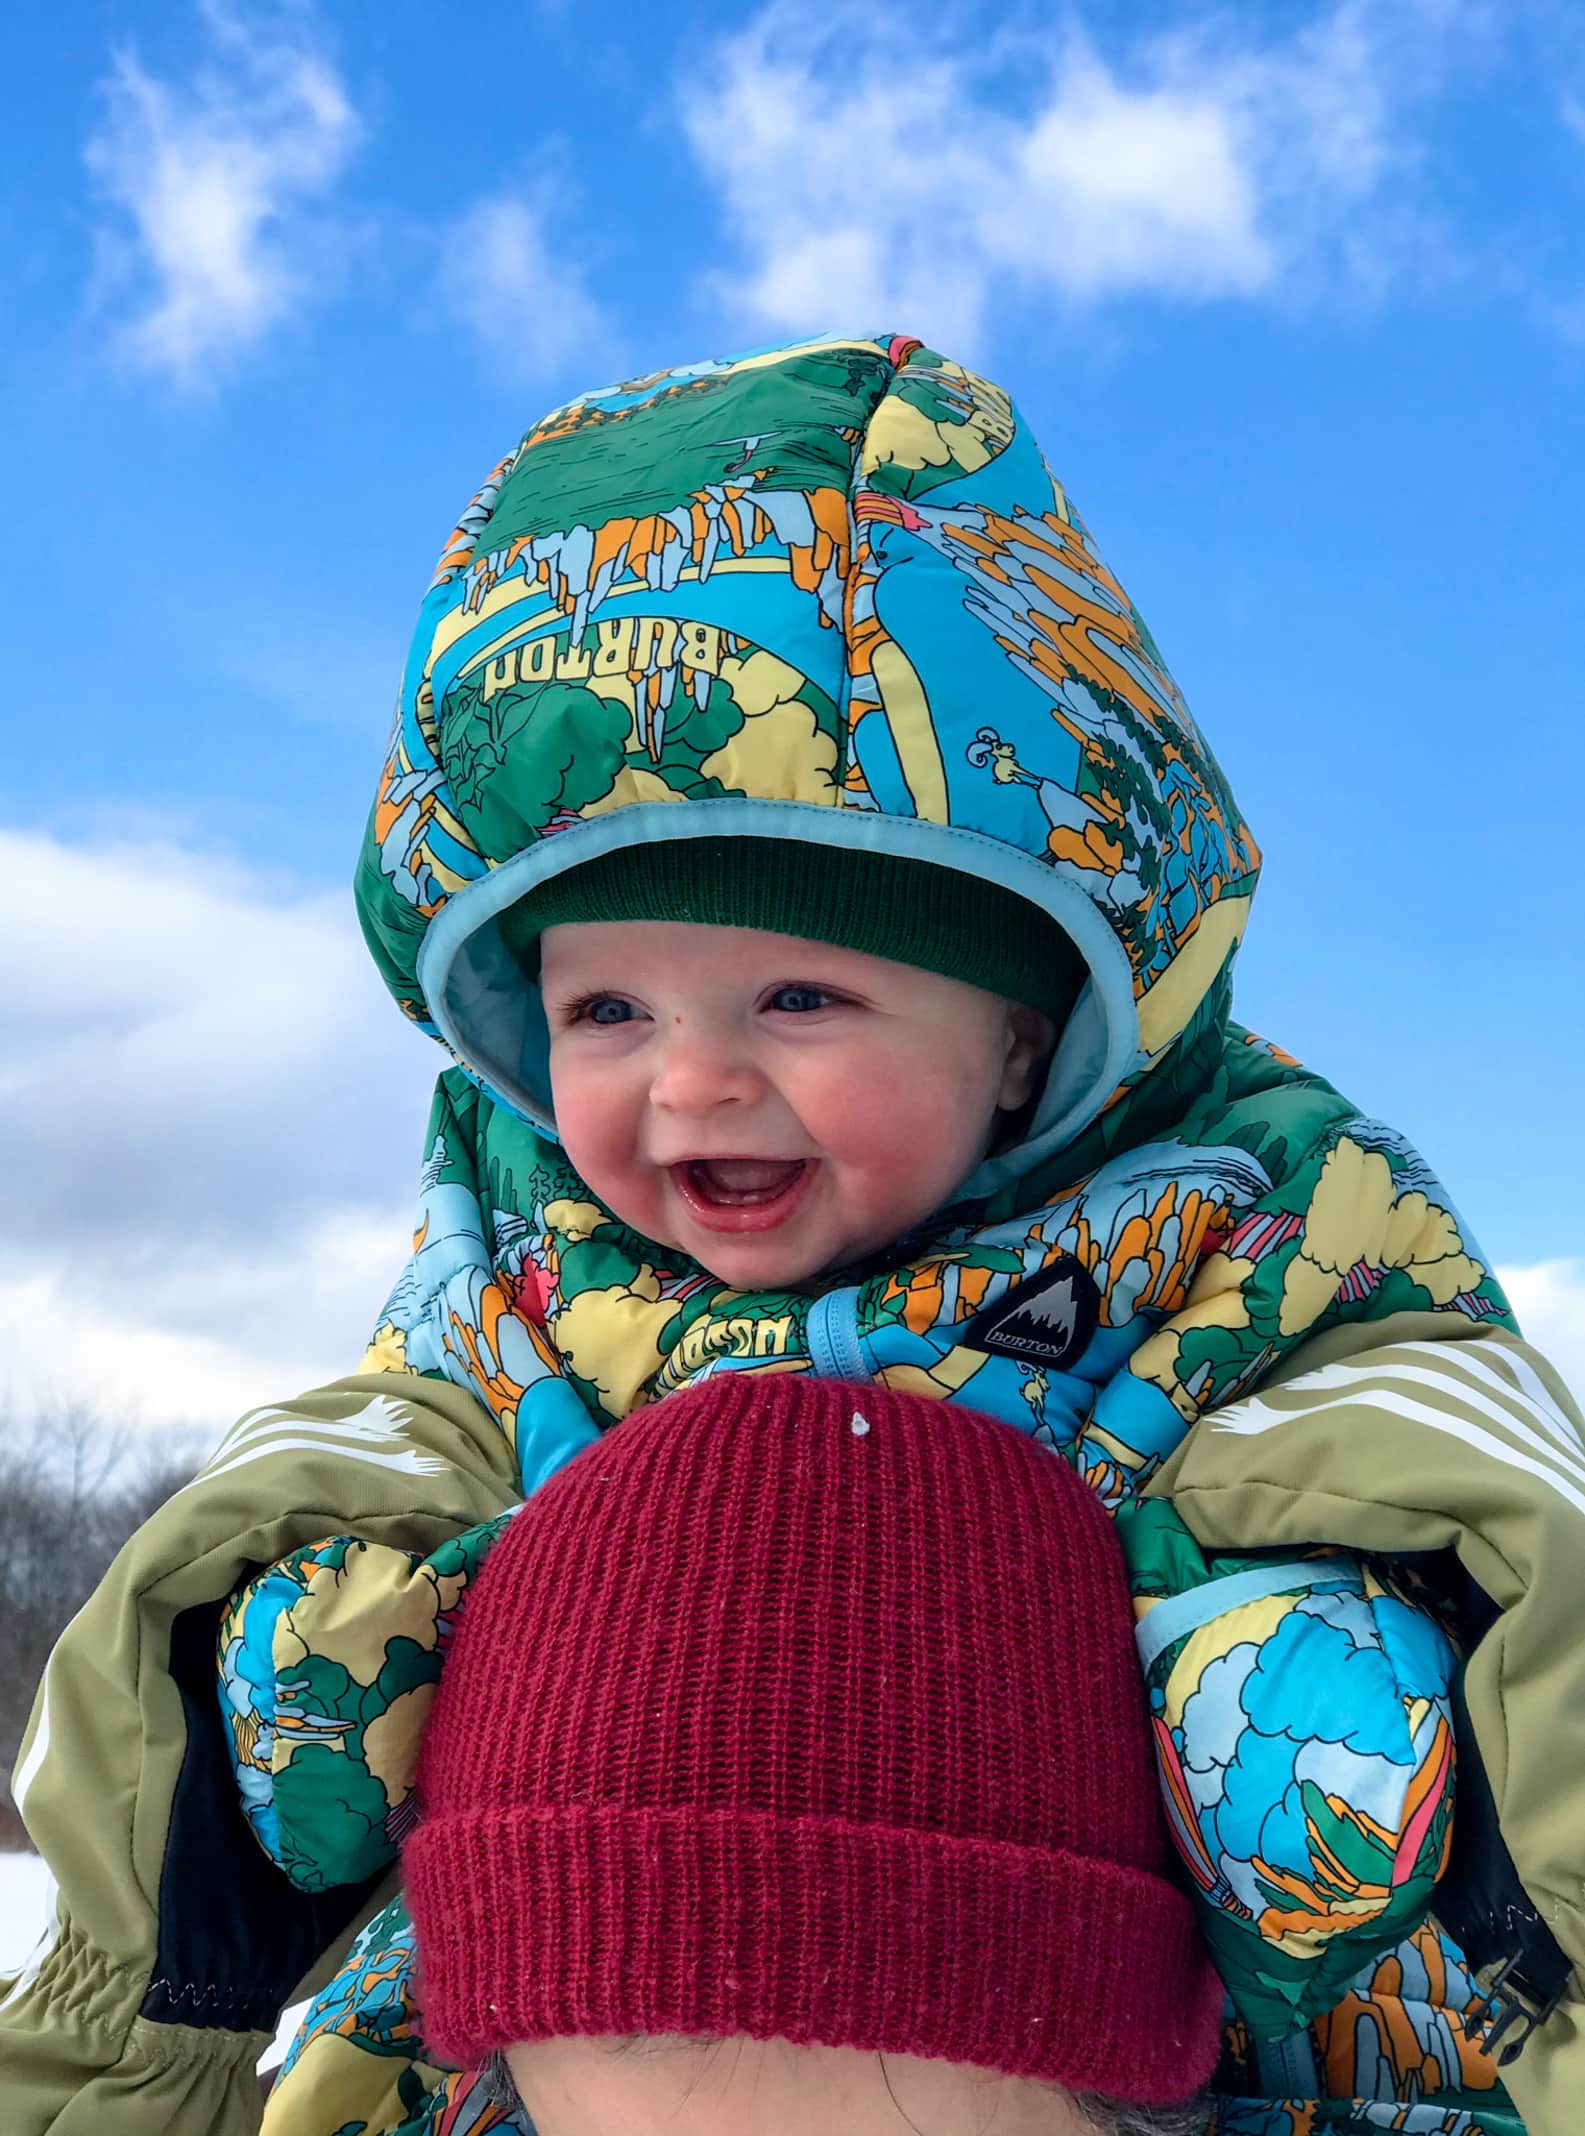 Infants' Burton Buddy Bunting Suit | Burton.com Winter 2022 US